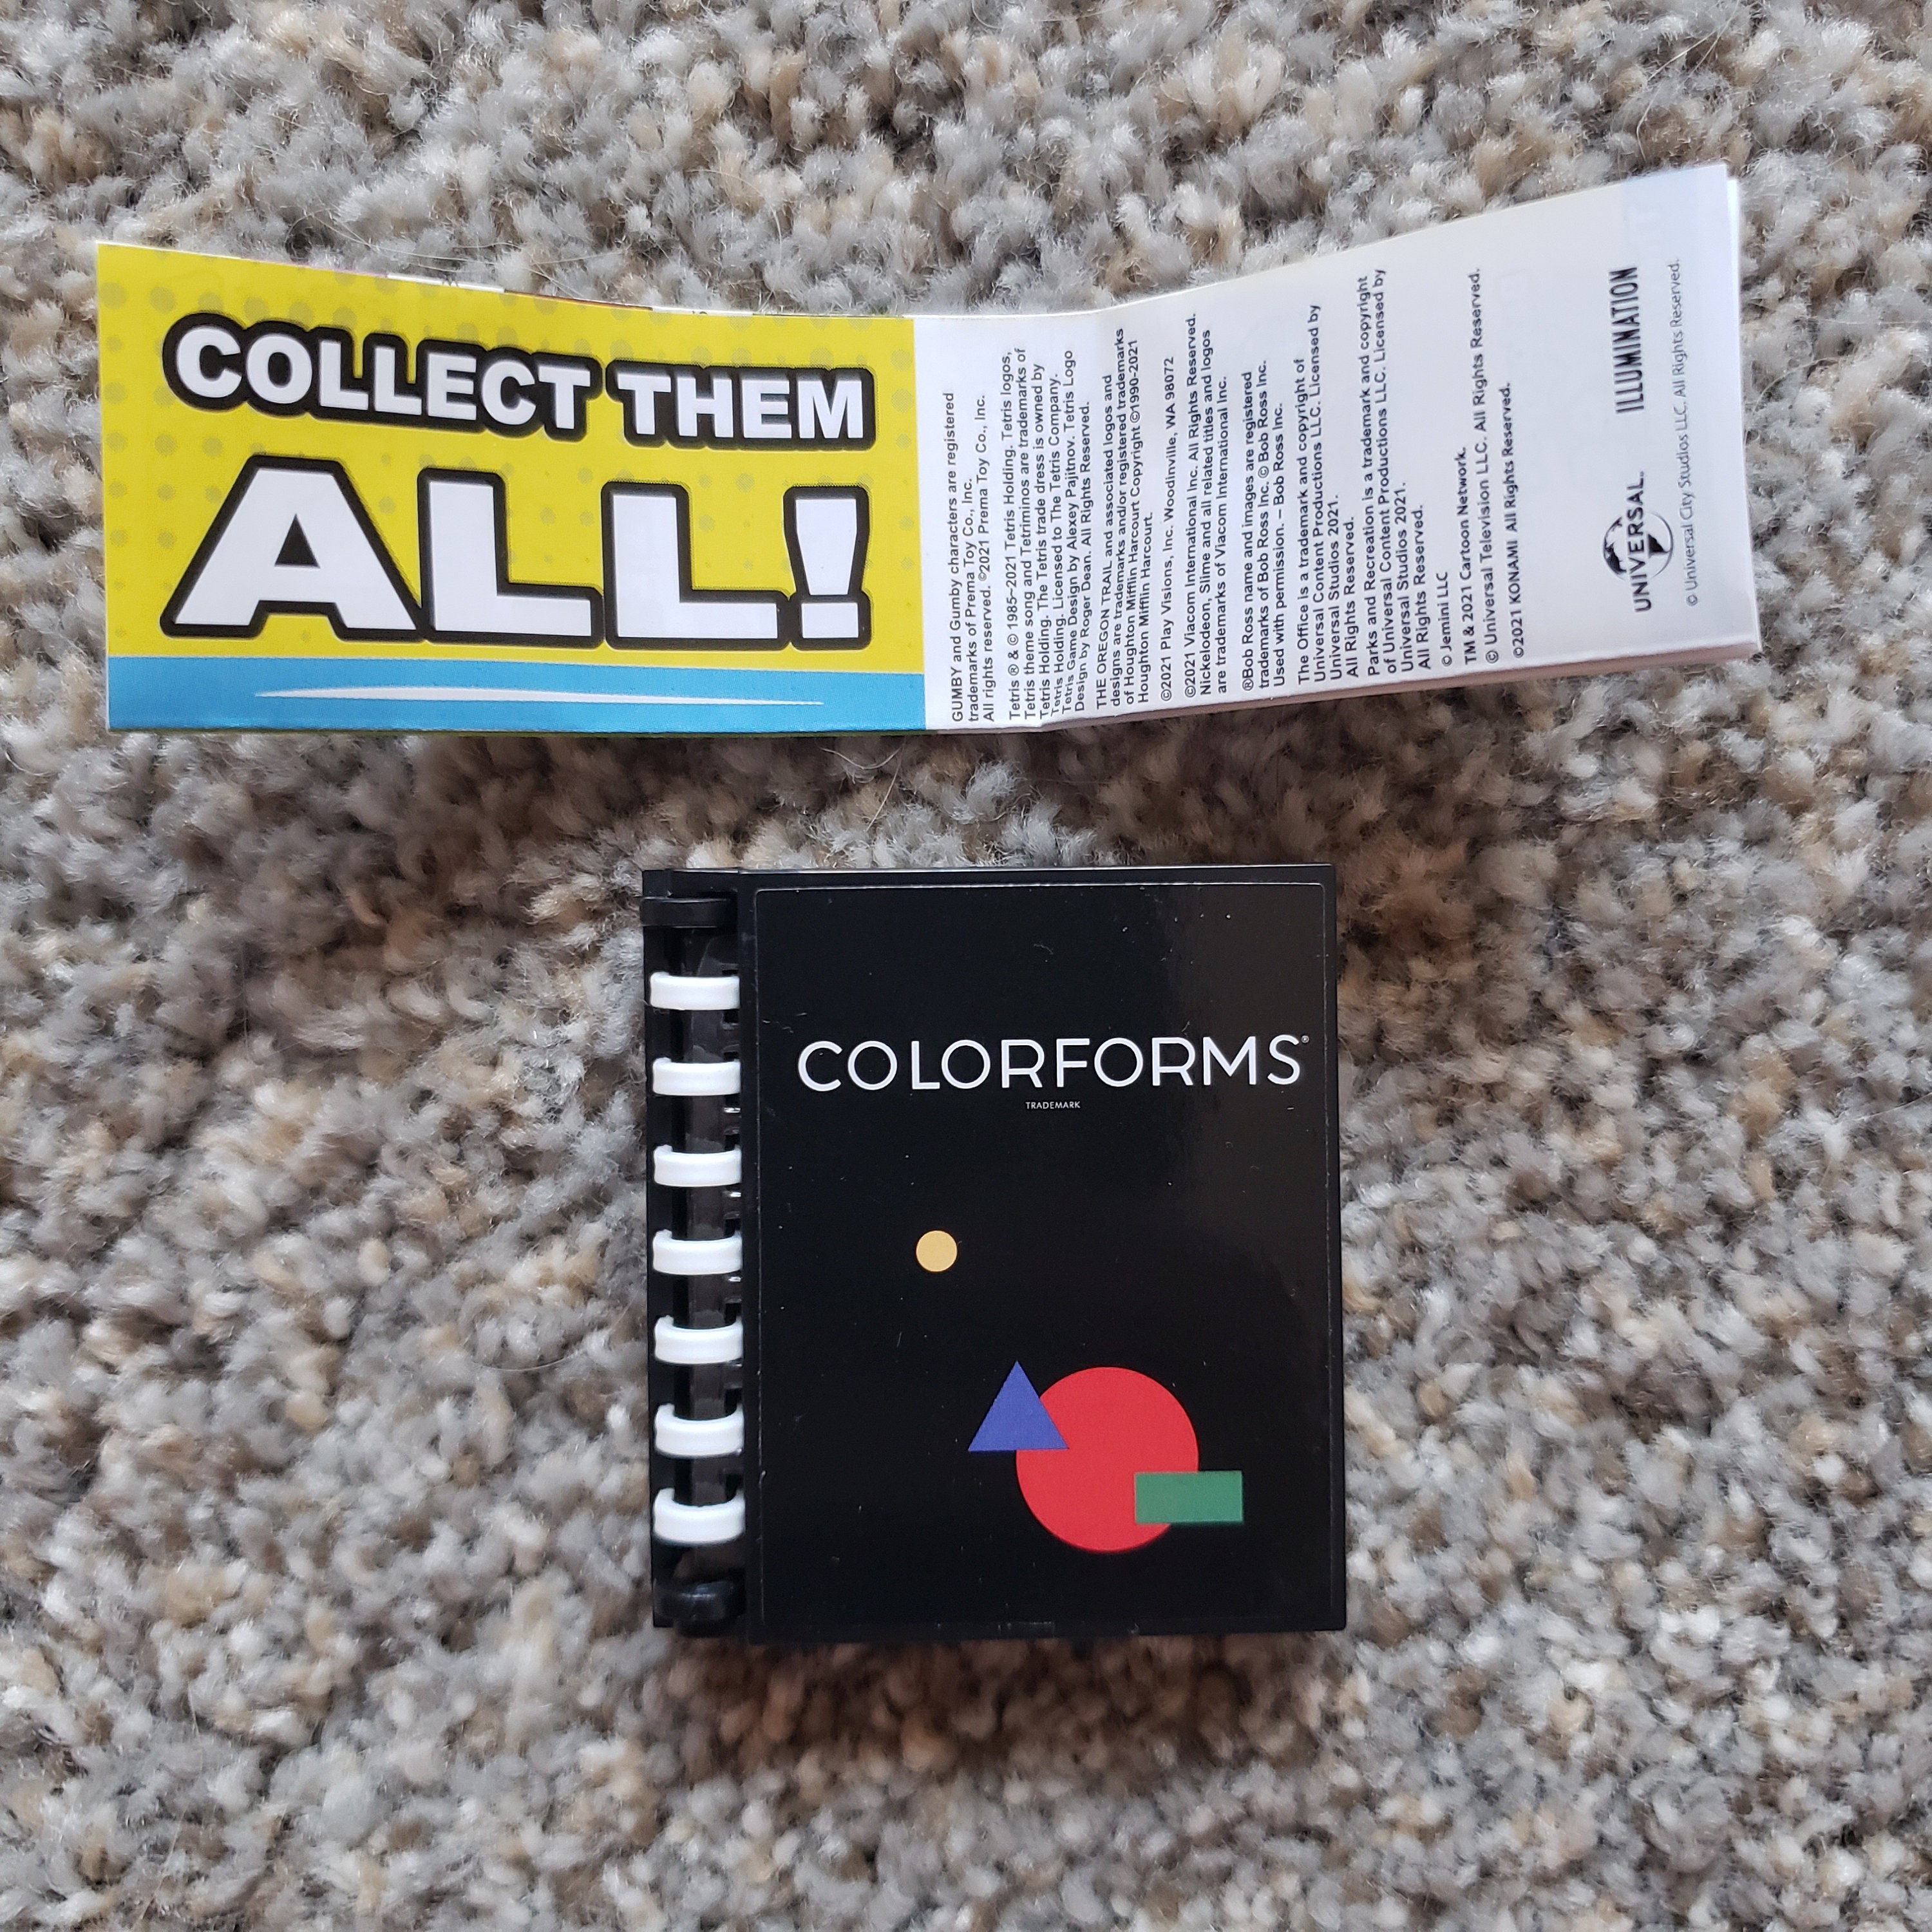 World's Smallest Colorforms